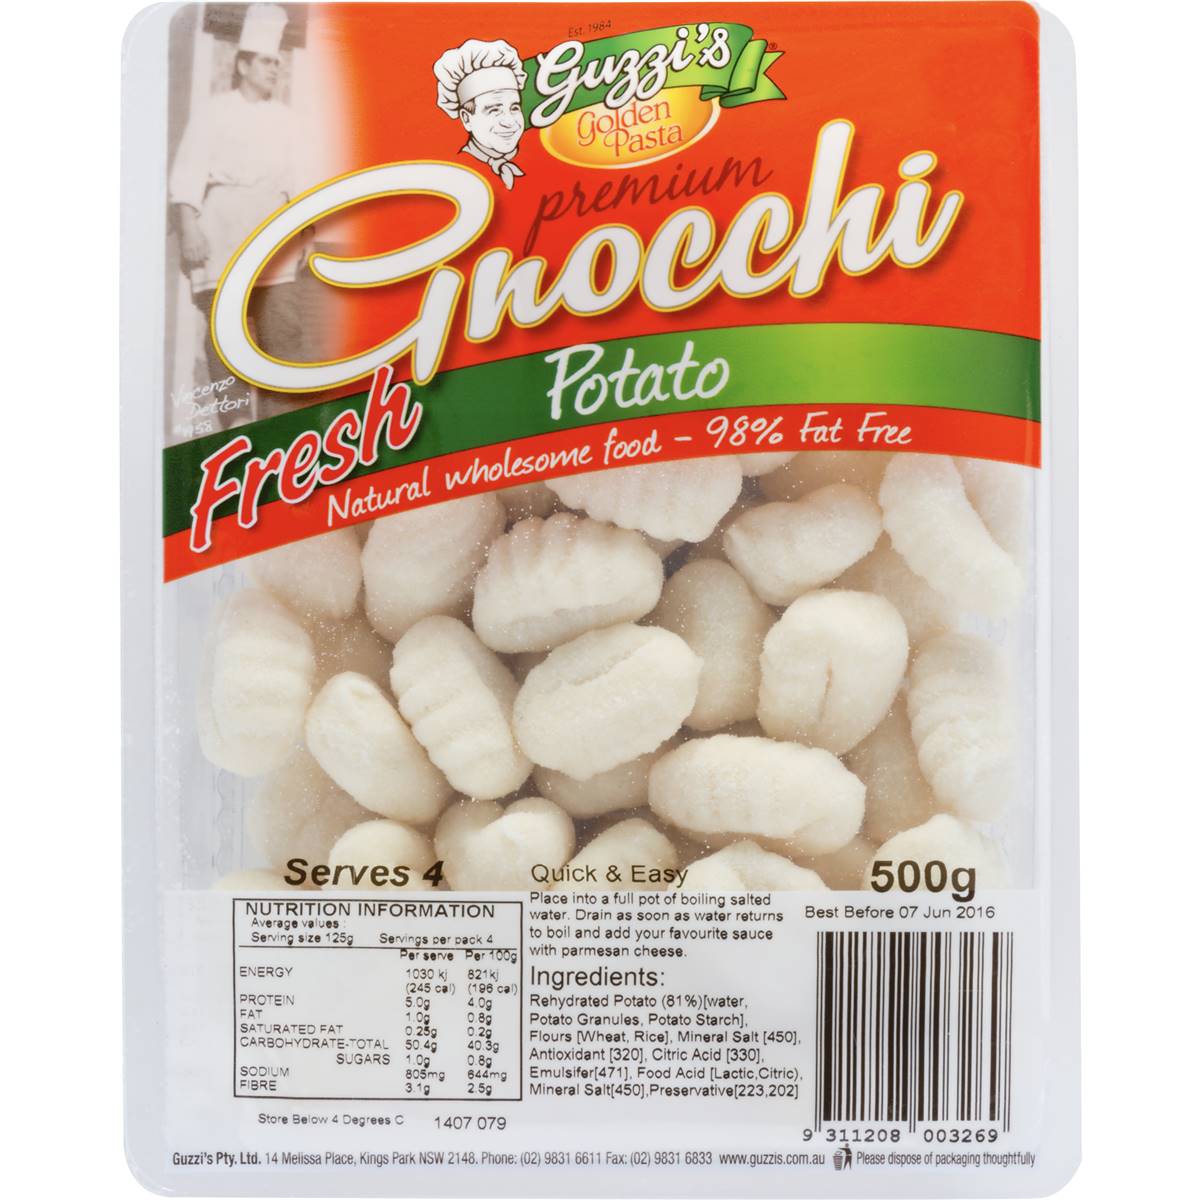 Golden Pasta Gnocchi Potato